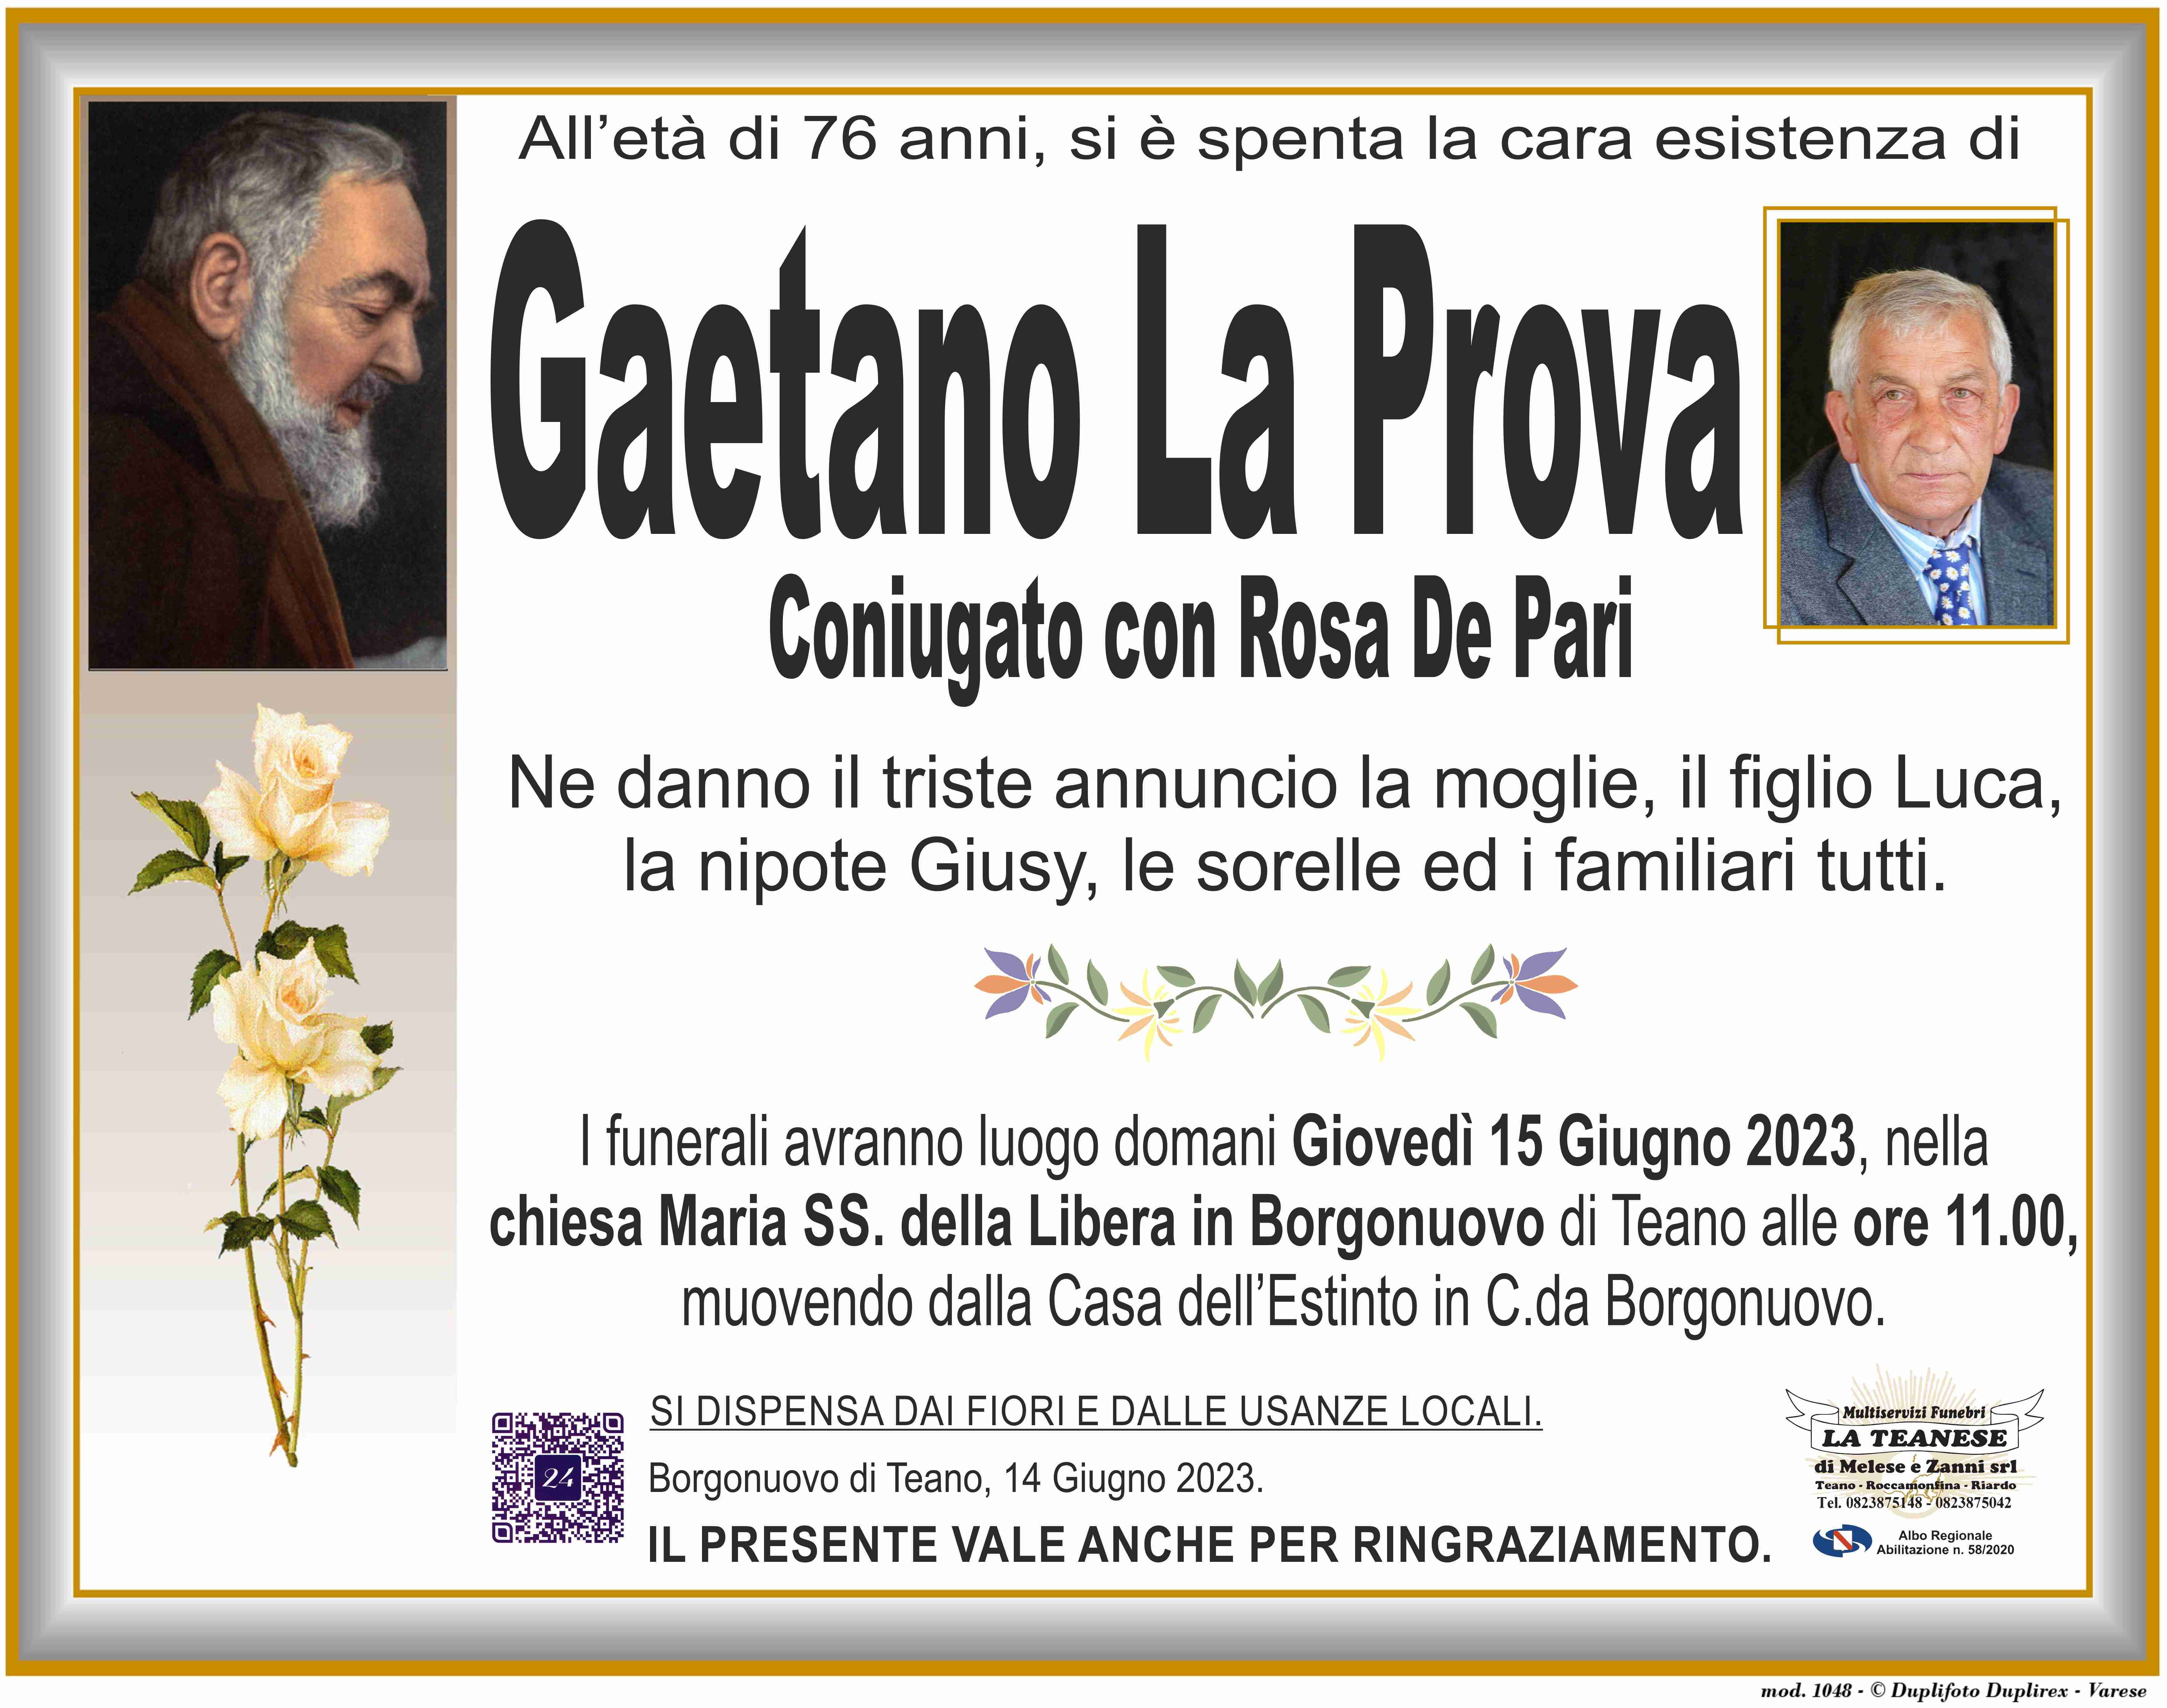 Gaetano La Prova